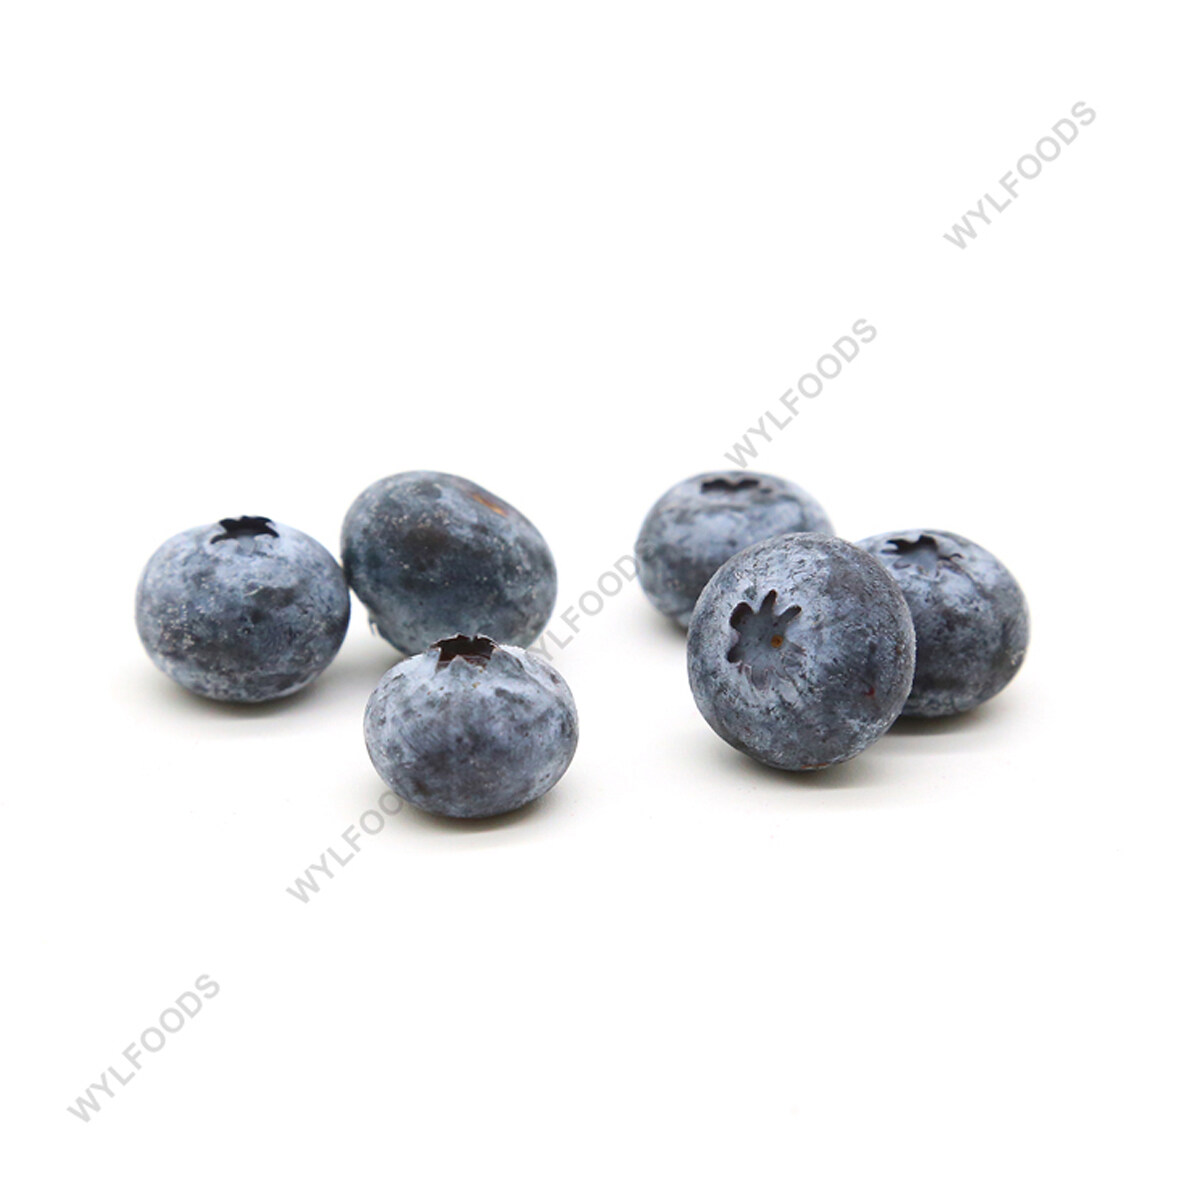 wholesale frozen blueberry, Custom frozen blueberry brands, frozen blueberry pulp, frozen blue berry Factory, organic frozen blueberries bulk